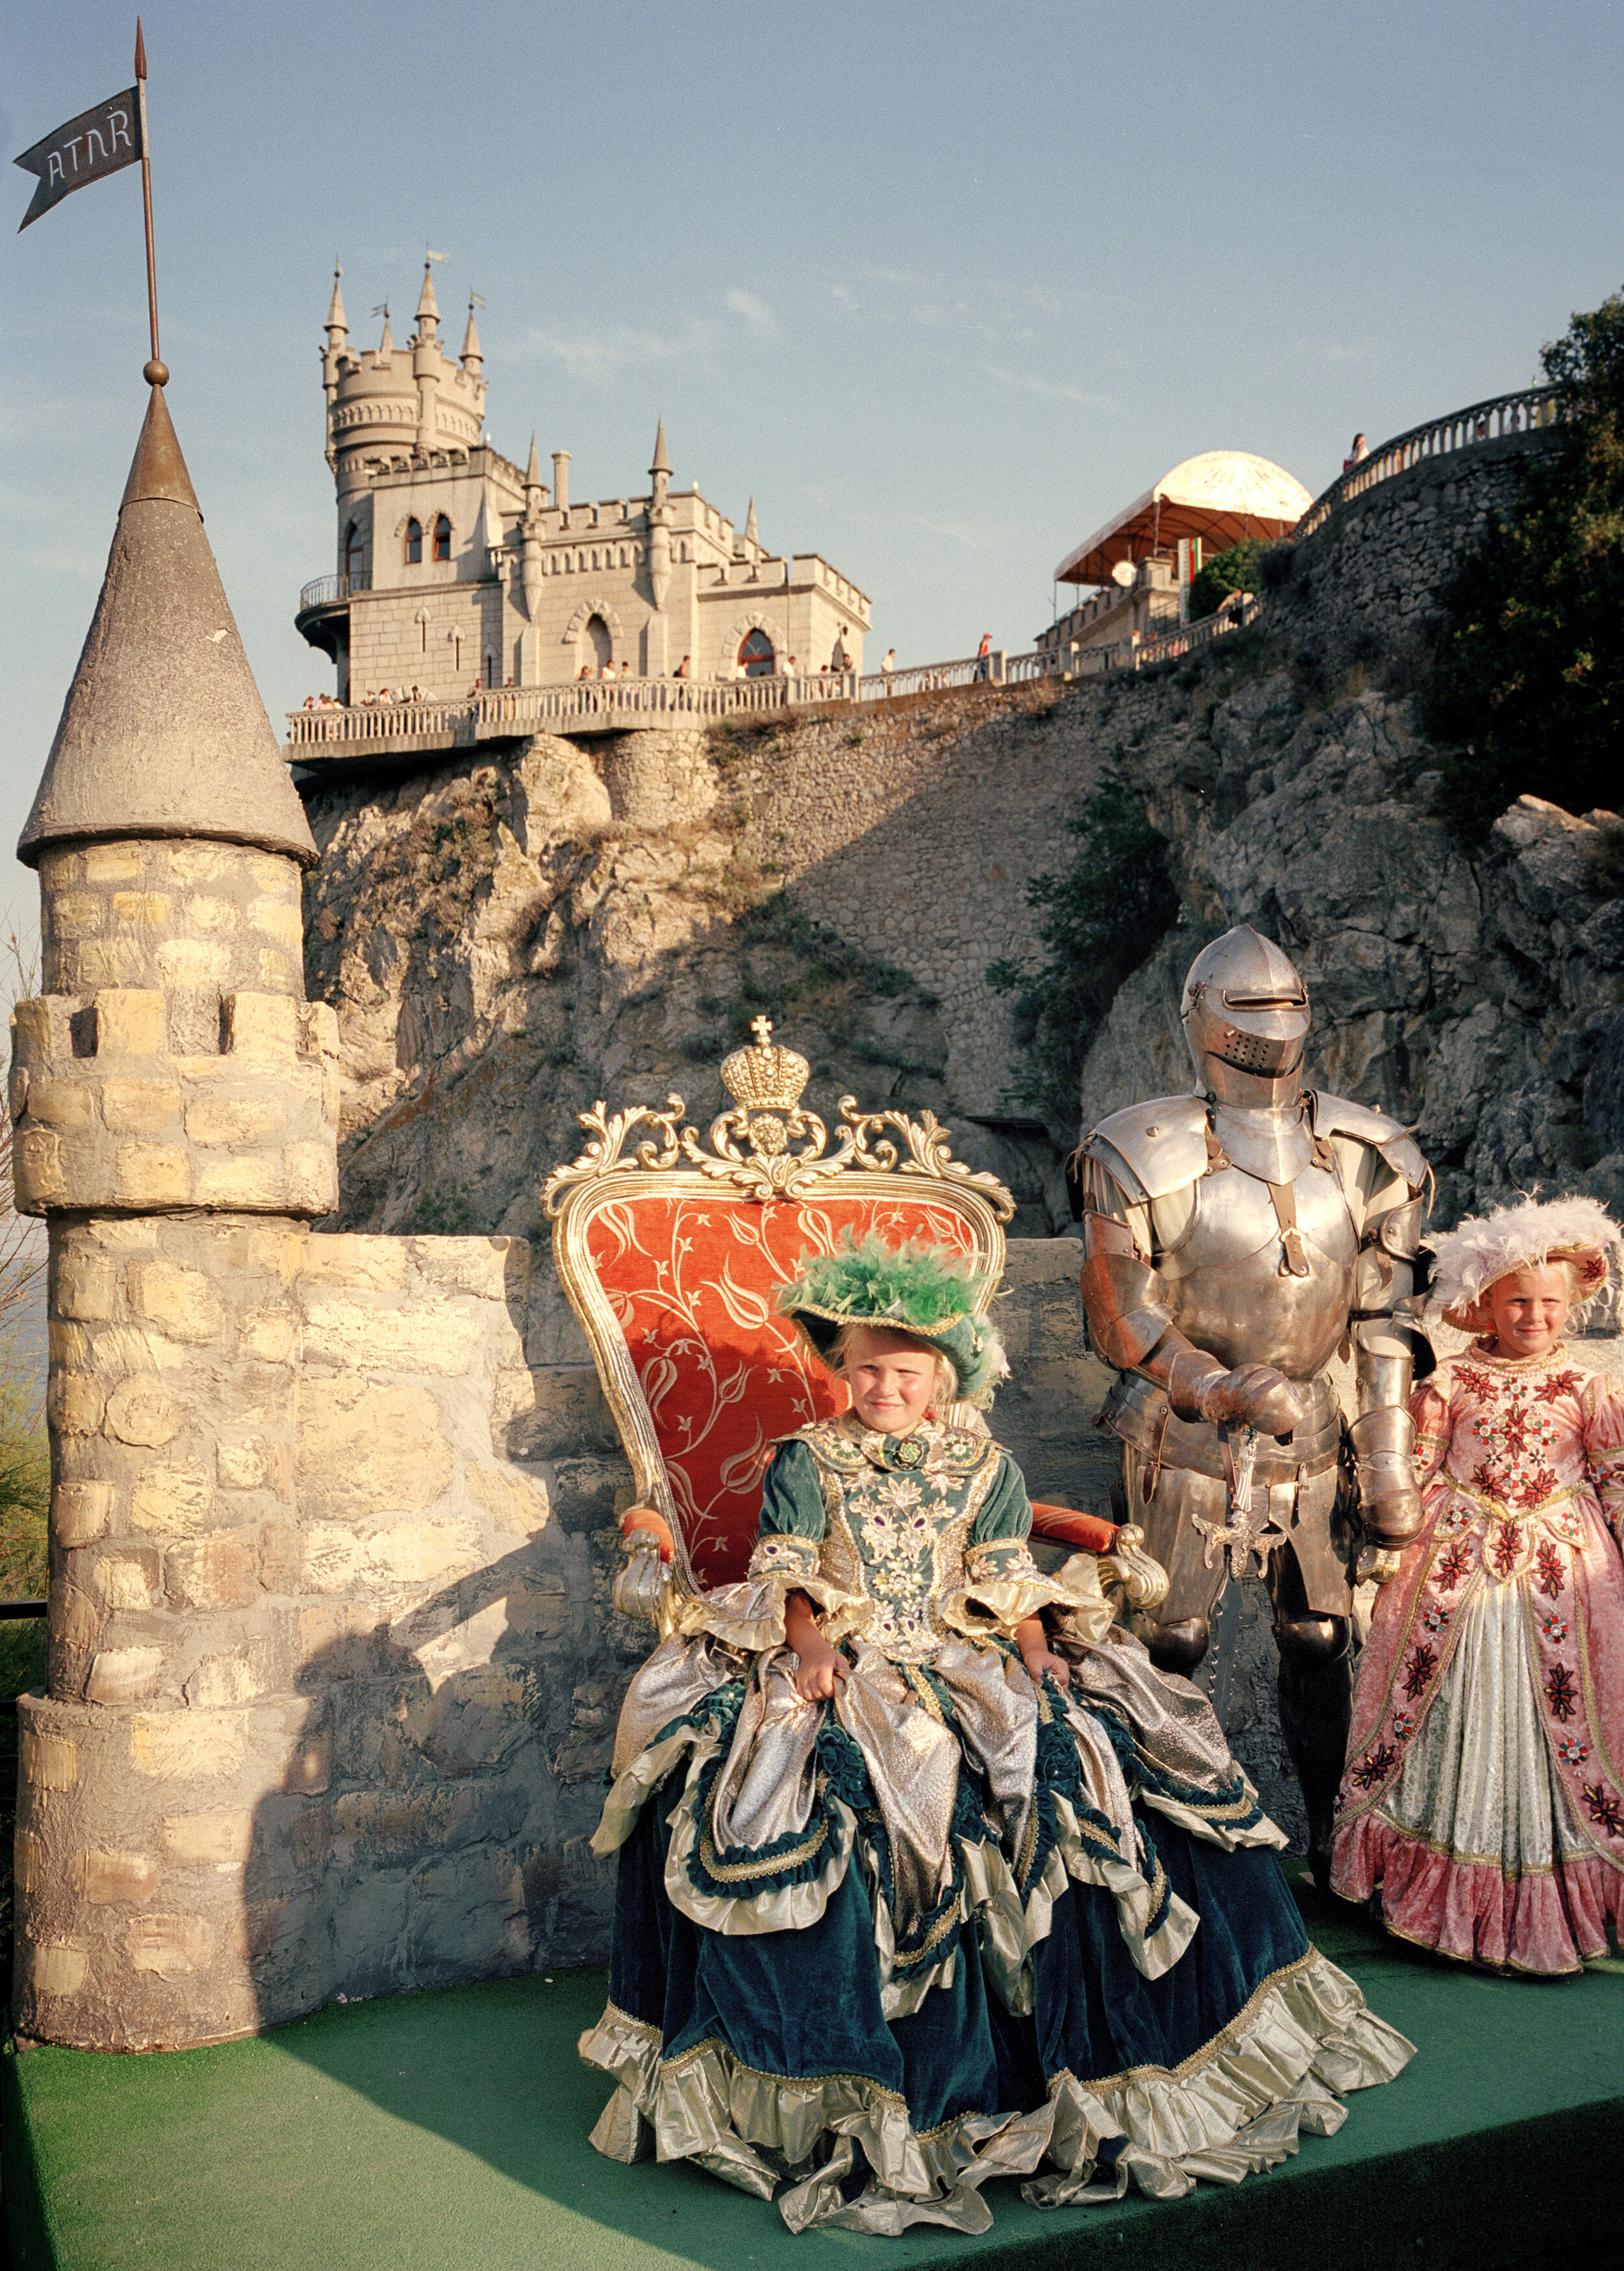  Historic Dresses in Yalta, The Crimea 